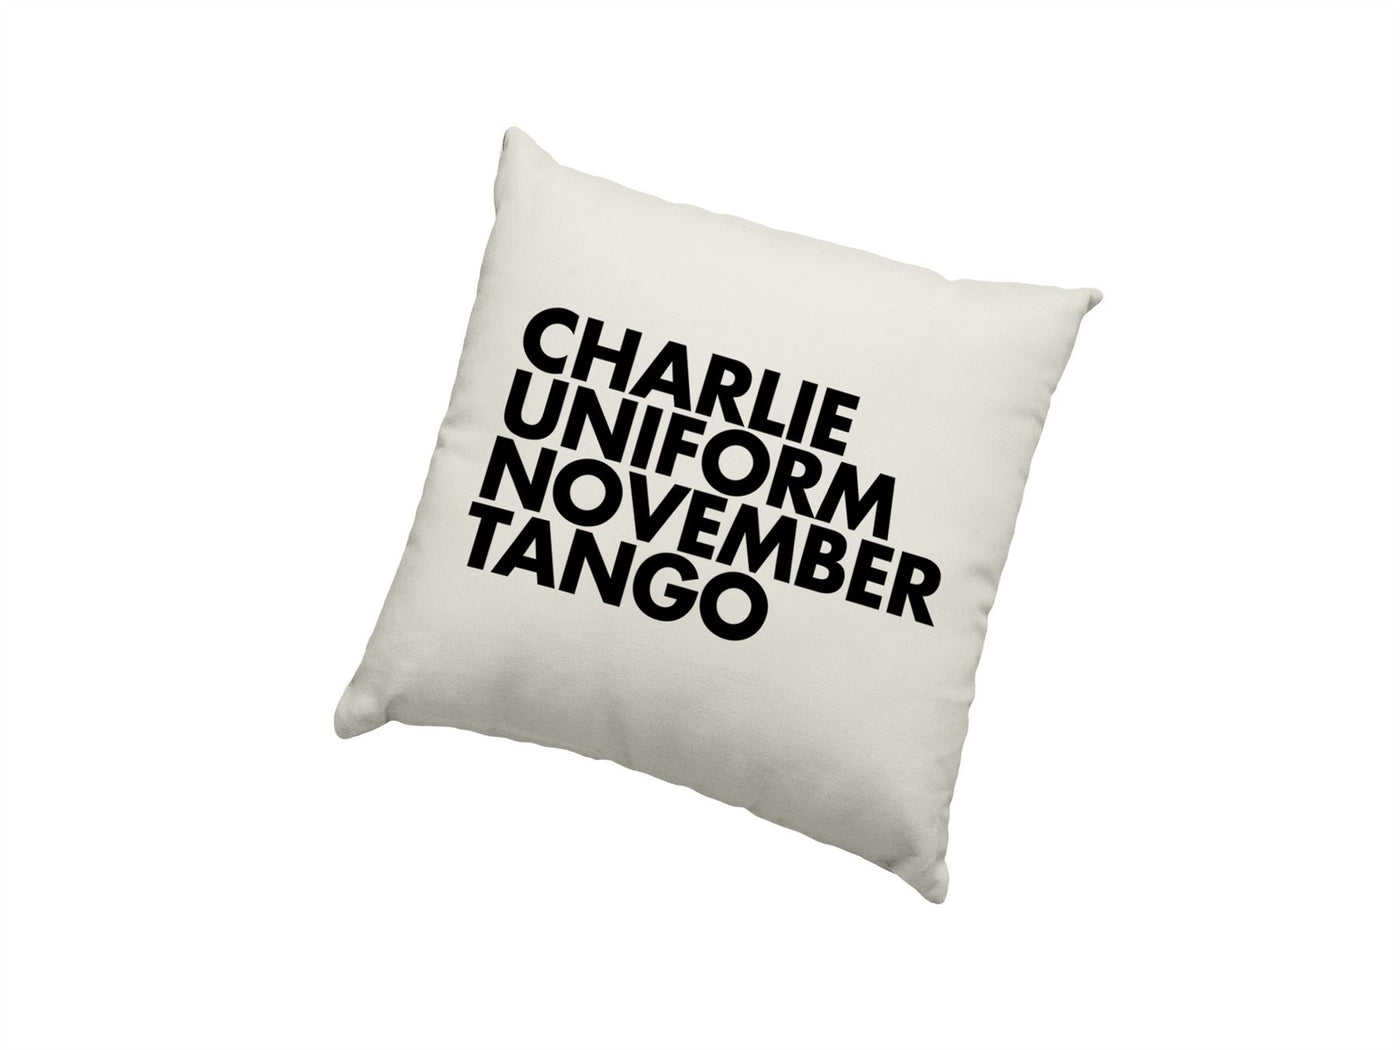 Charlie Uniform November Tango Cushion Cover - Funny NSFW Rude Swear